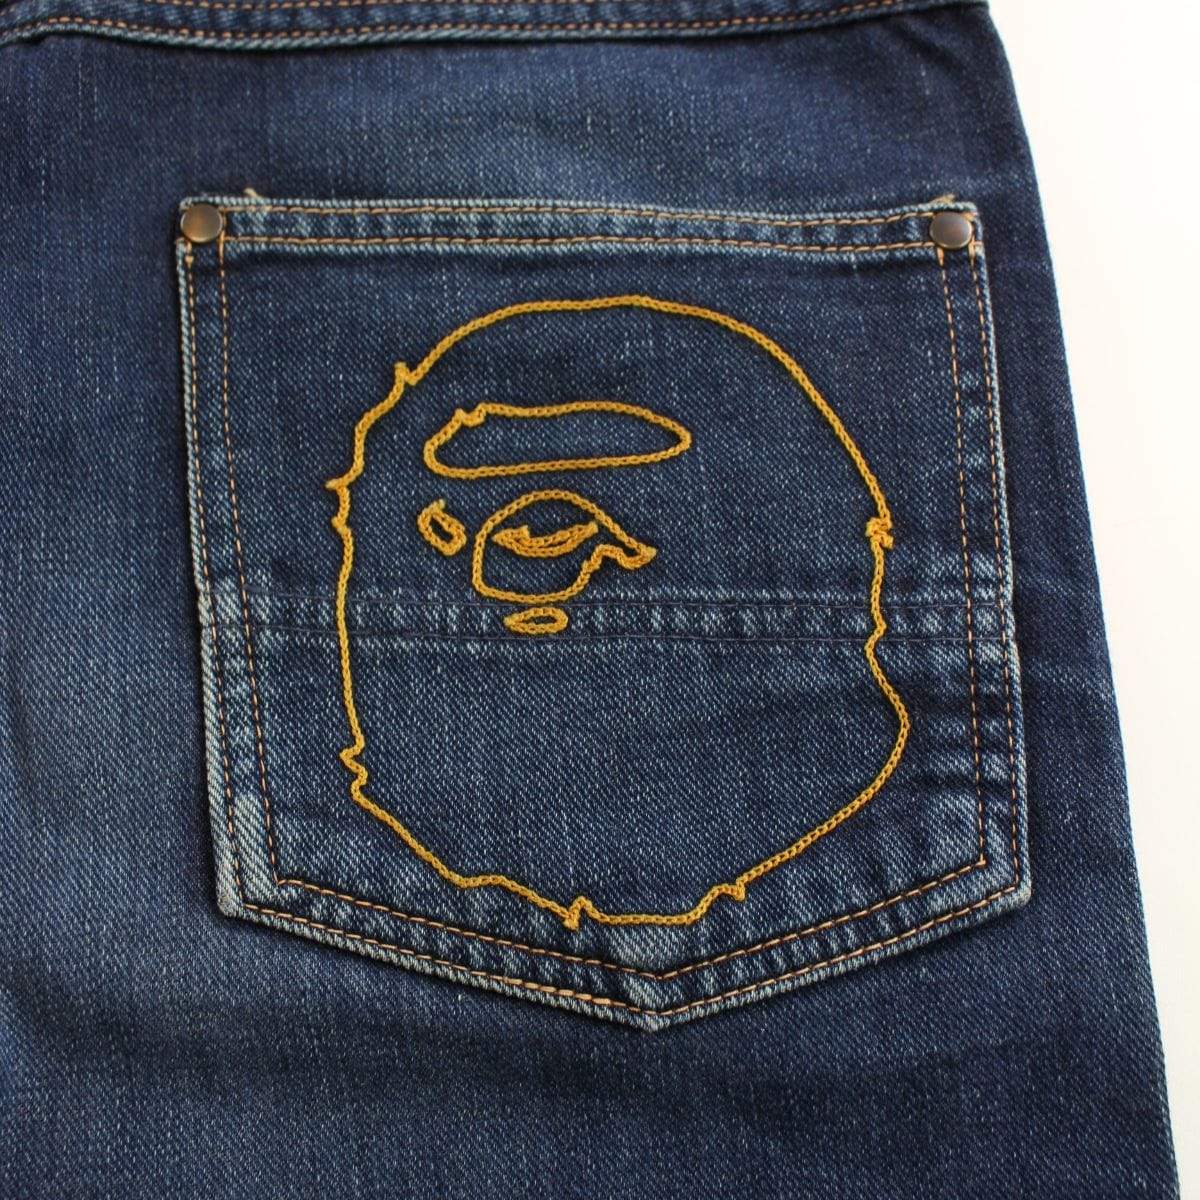 bape big ape logo embroided jeans - SaruGeneral